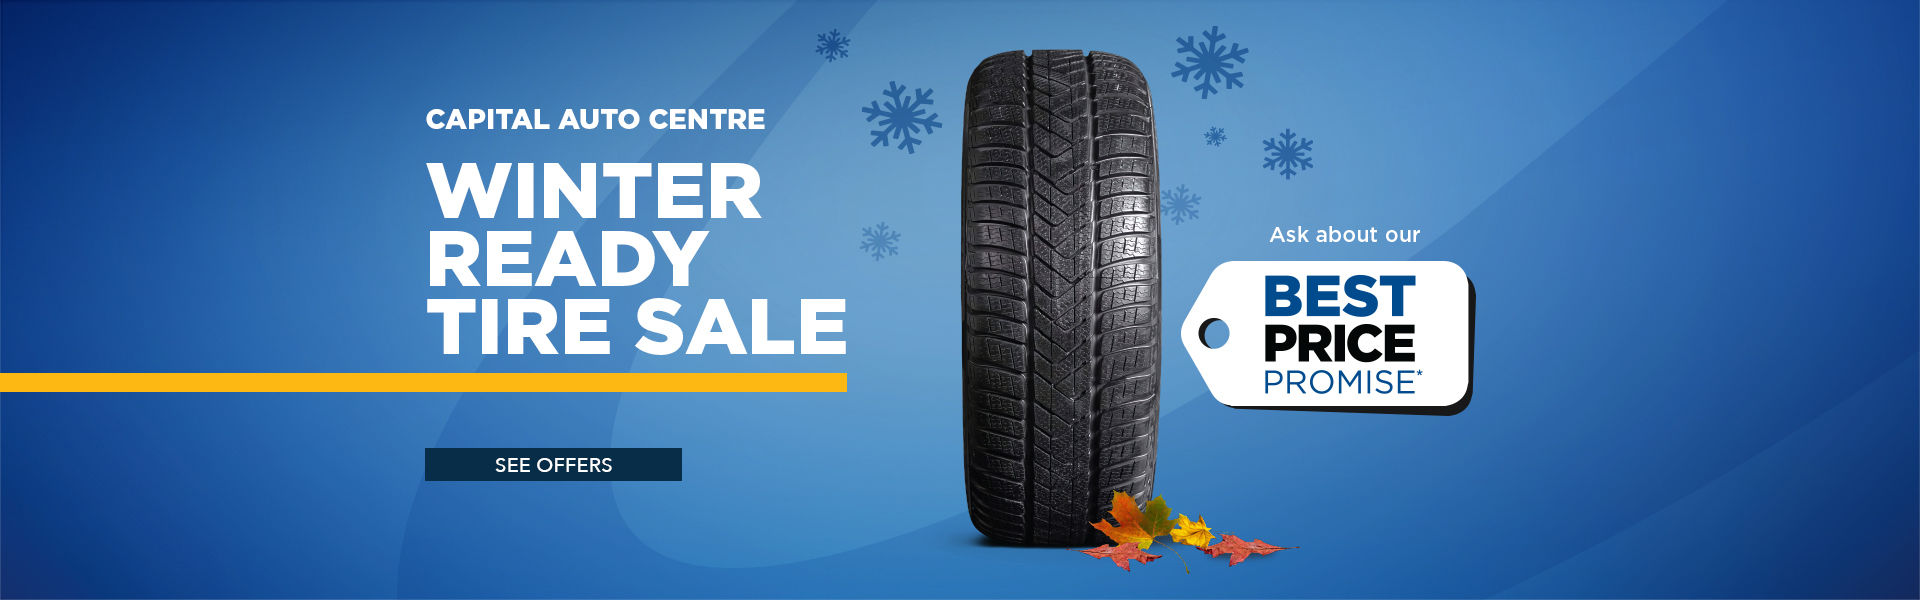 CAC - Winter Ready Tire Sale